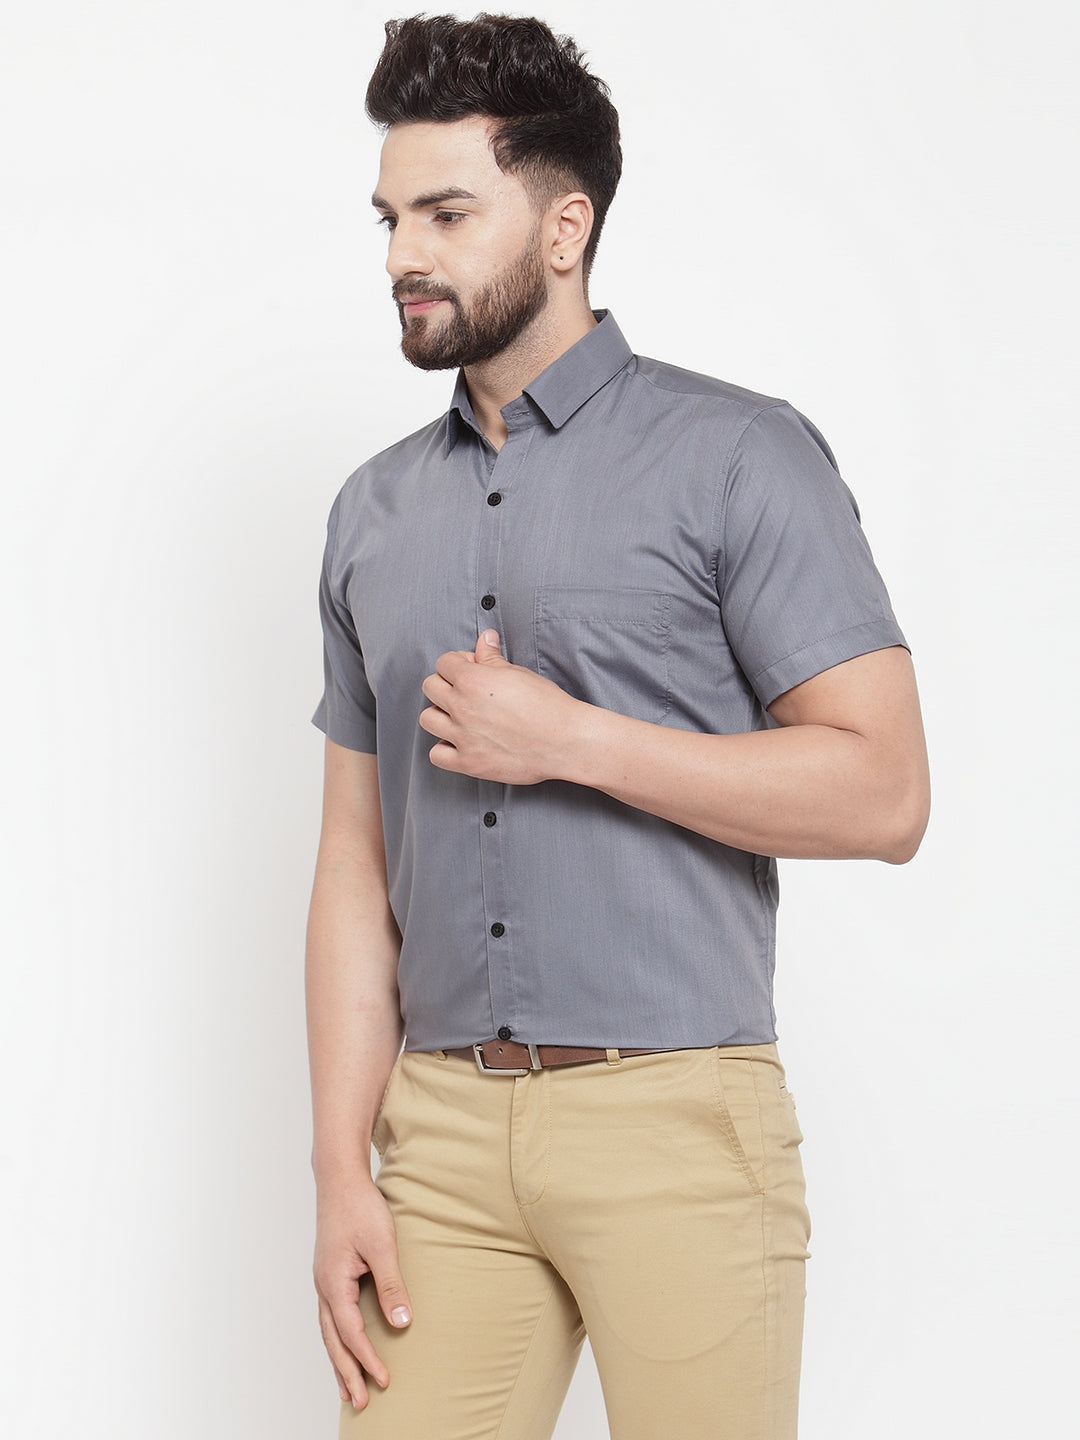 Men's Grey Cotton Half Sleeves Solid Formal Shirts ( SF 754Grey ) - Jainish